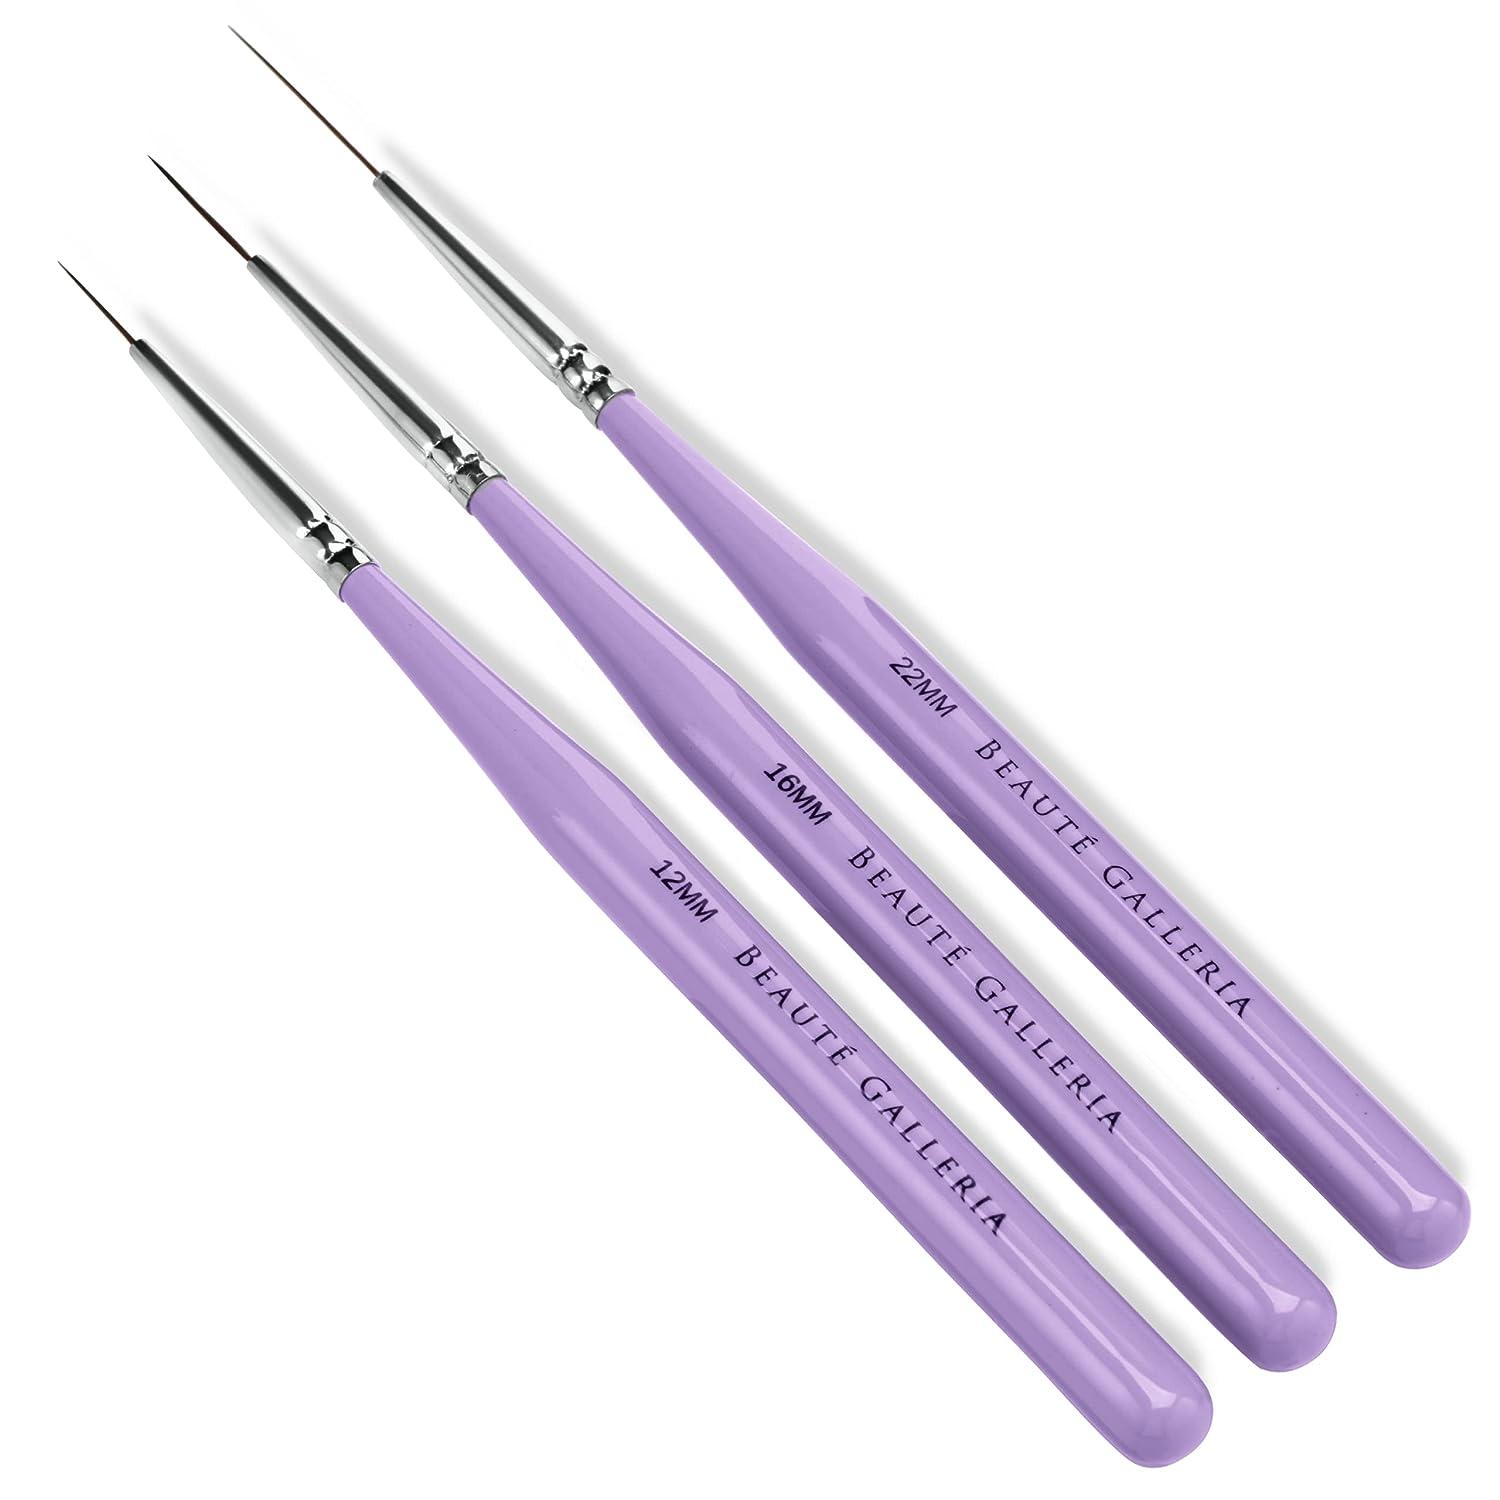 Tinsow 3pcs Professional Nail Art Brush Set Liner Pens Striping Brushes for  Short Strokes, Details, Blending, Elongated Lines etc (Transparent)